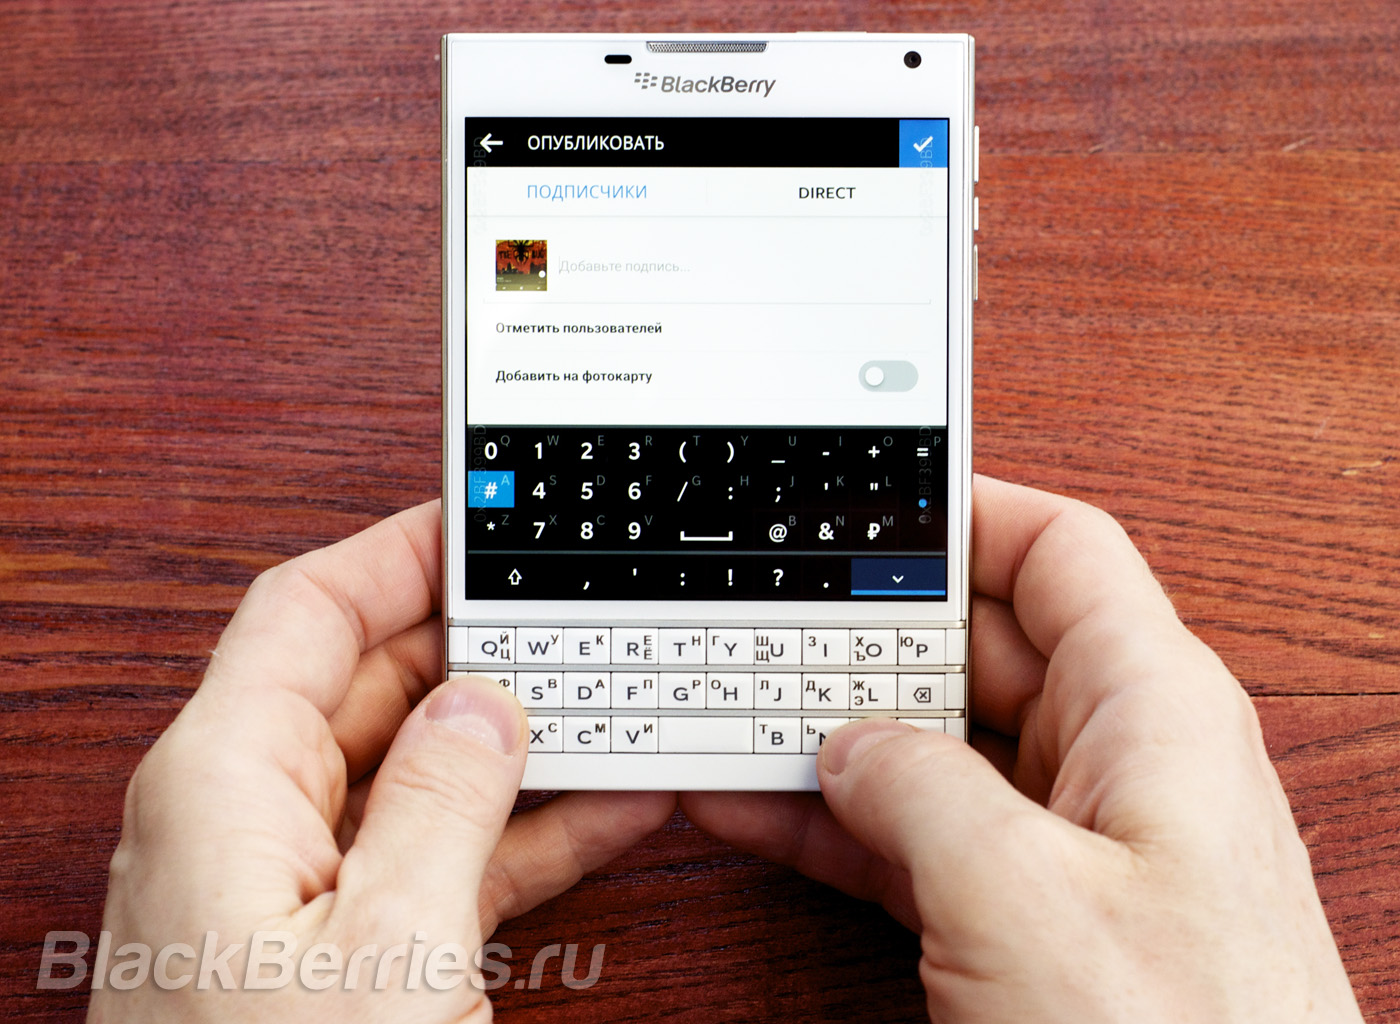 BlackBerry-Passport-Keyboard